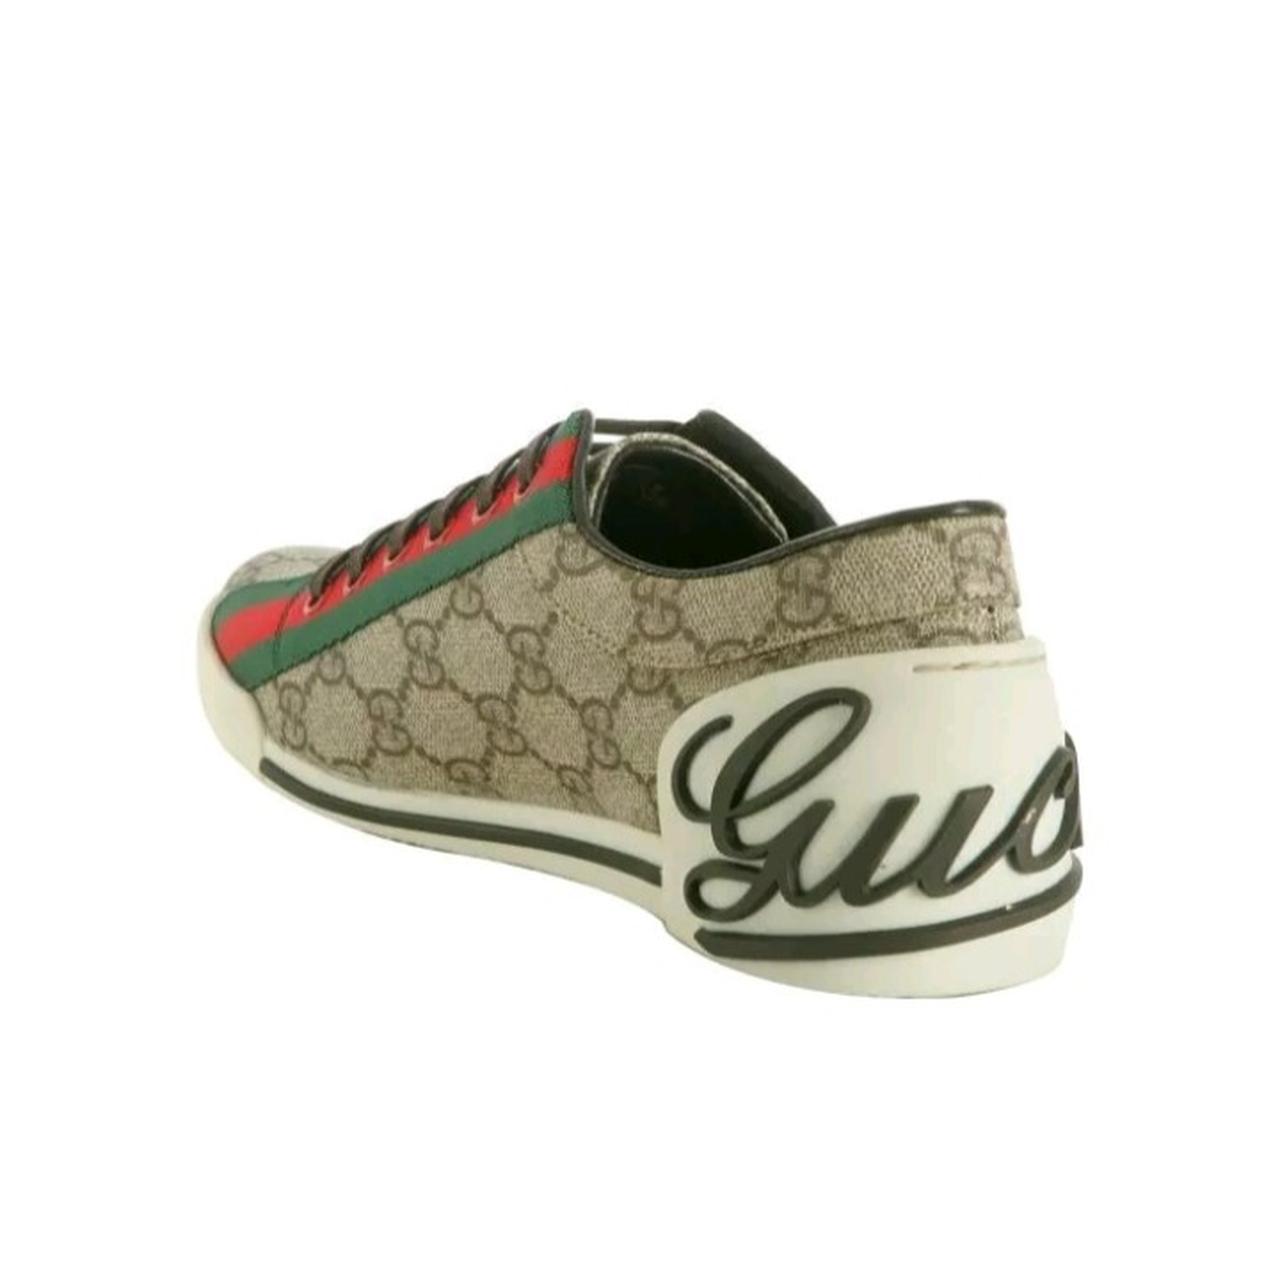 Gucci shoes Worn 2x Size 6.5 (US) Size 36.5 (EU) - Depop